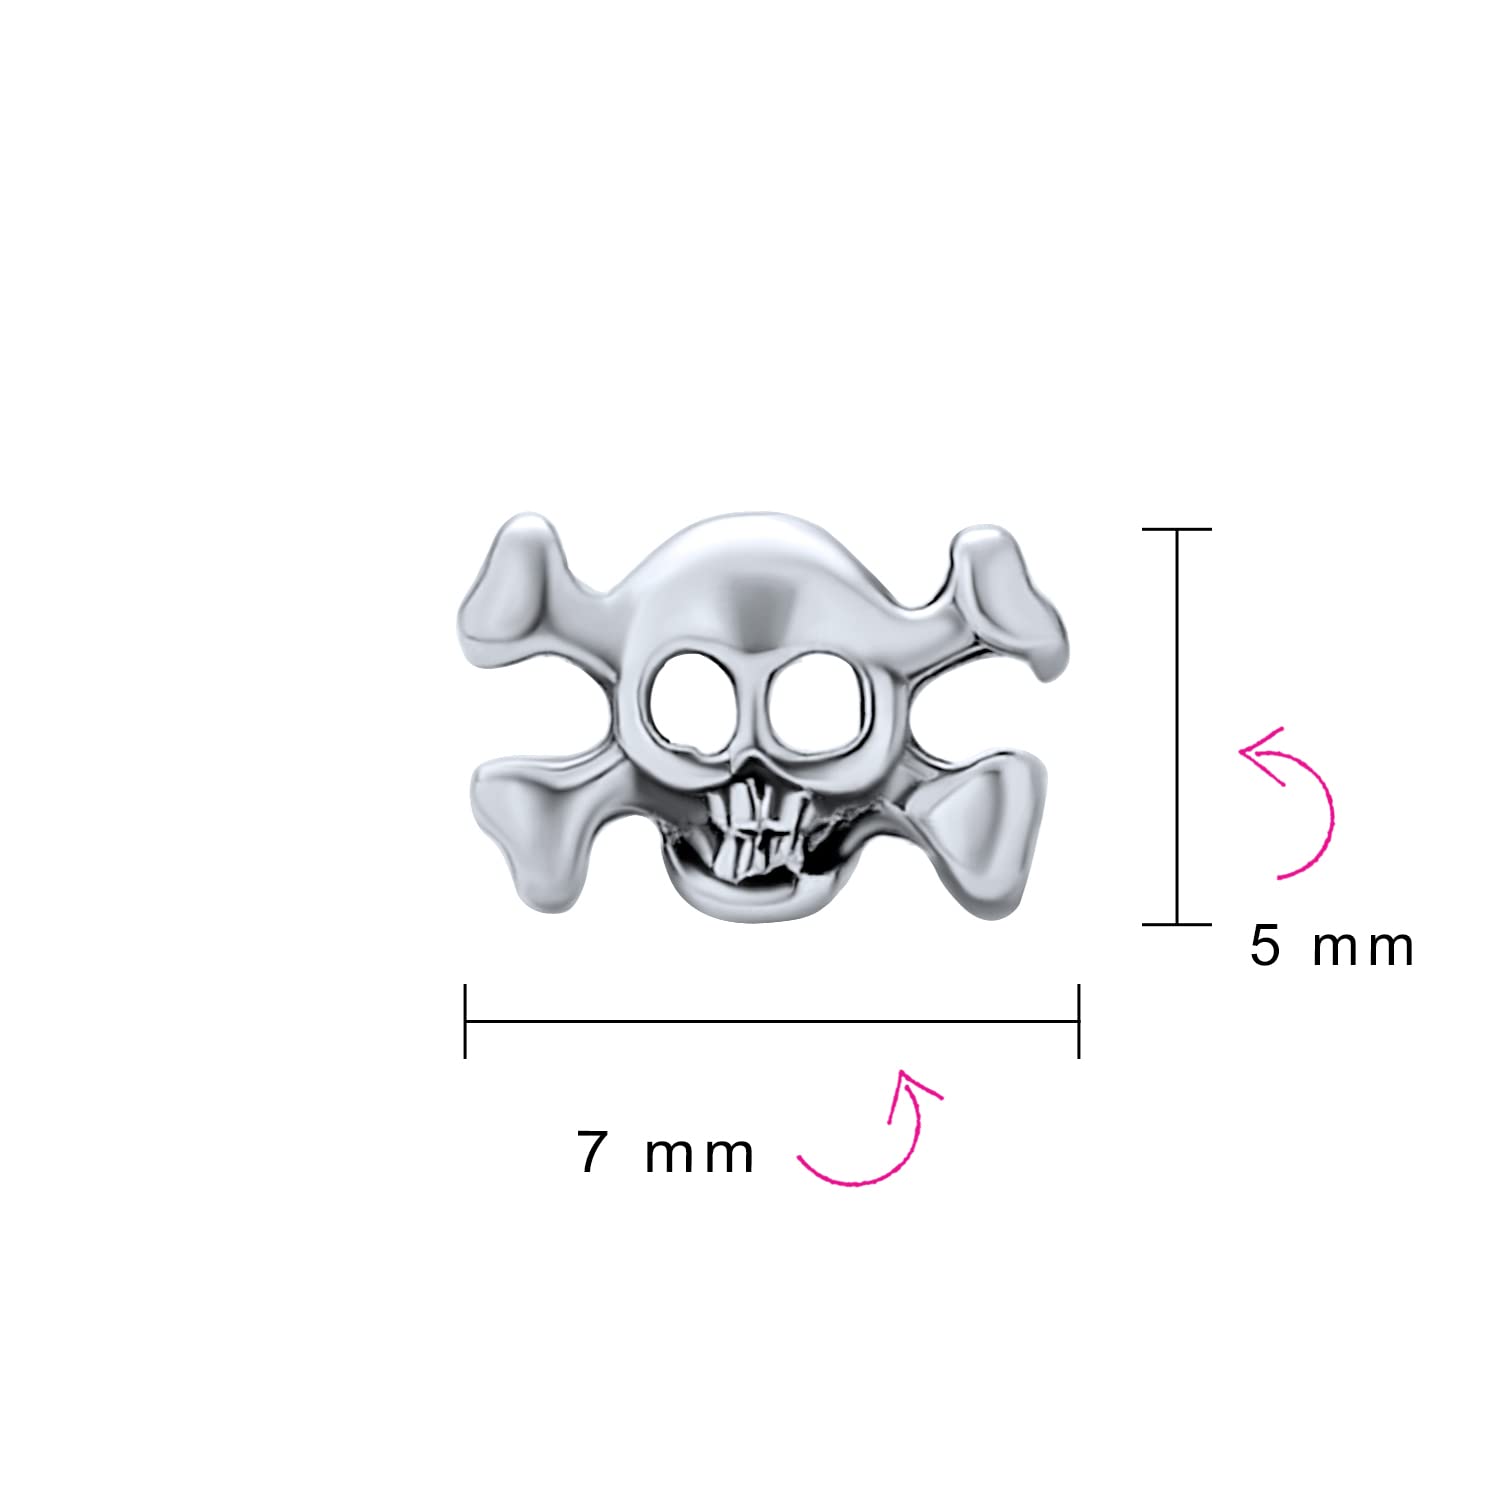 Caribbean Pirate Skeleton Goth Crossbones Skull Dangle Stud Earrings in Unisex Style for Men, Women, Bikers, Punk Rockers Teens Crafted from .925 Sterling Silver.